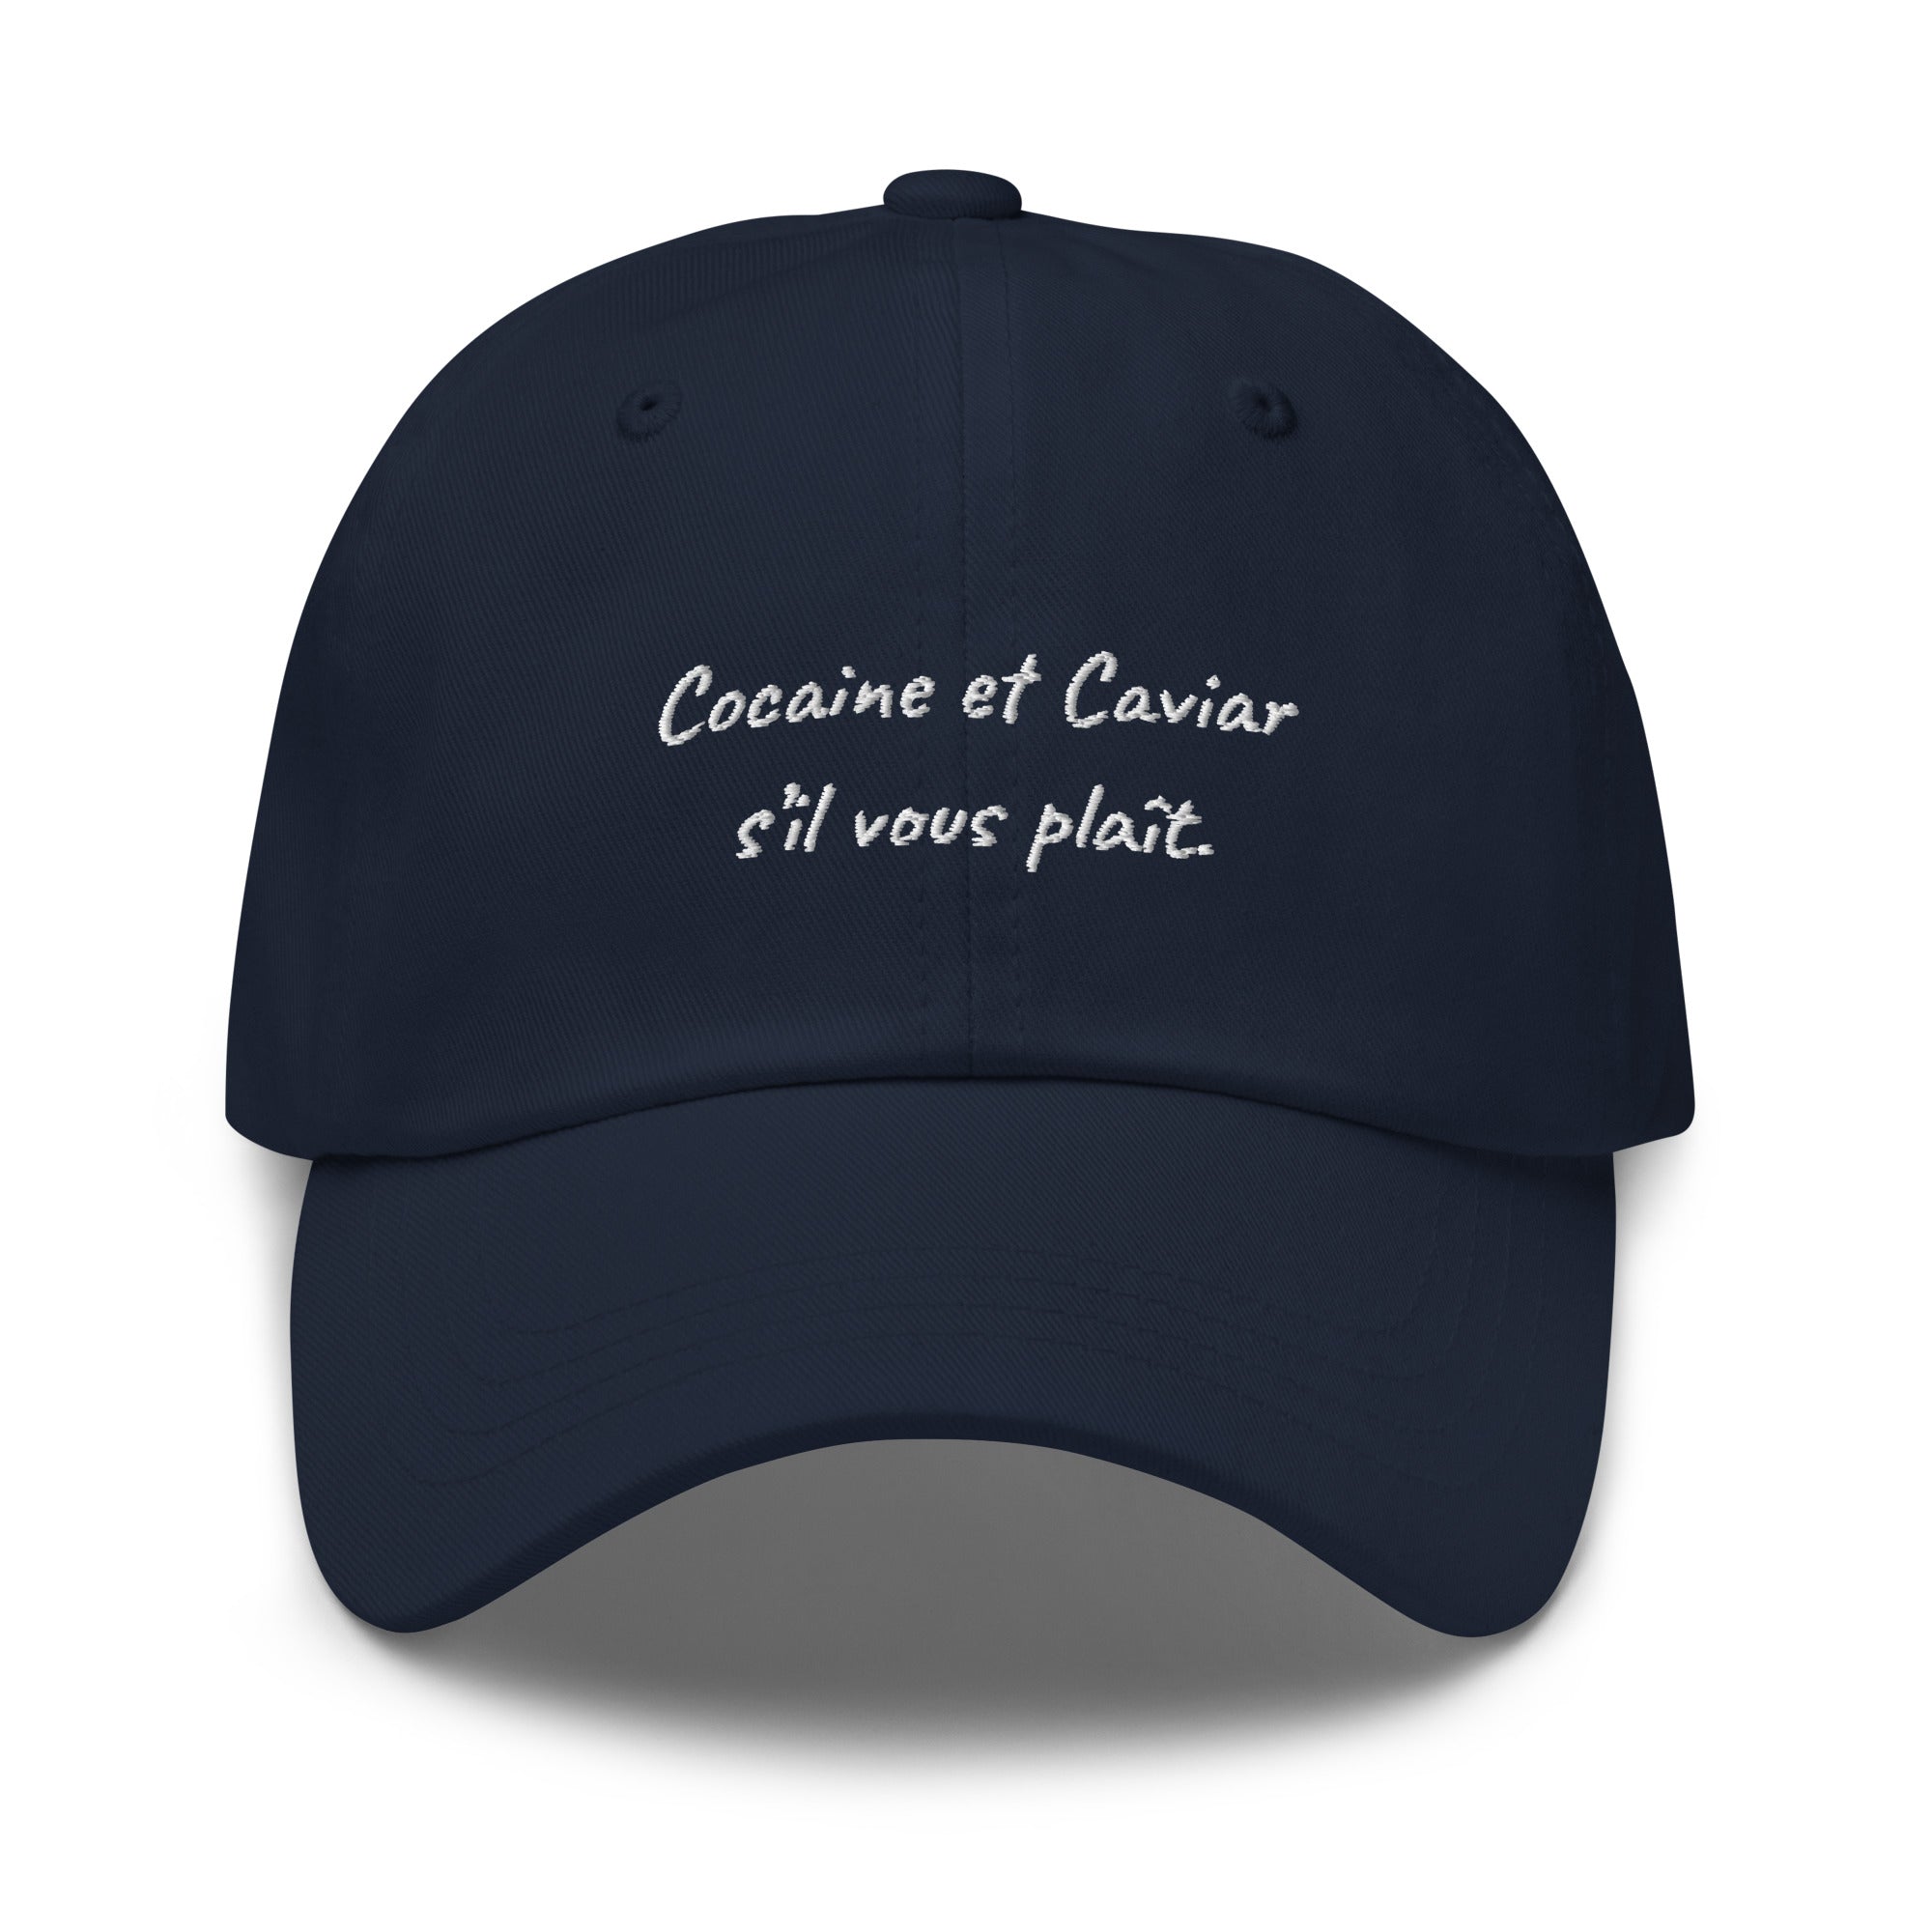 Cocaine et caviar - Dad hat